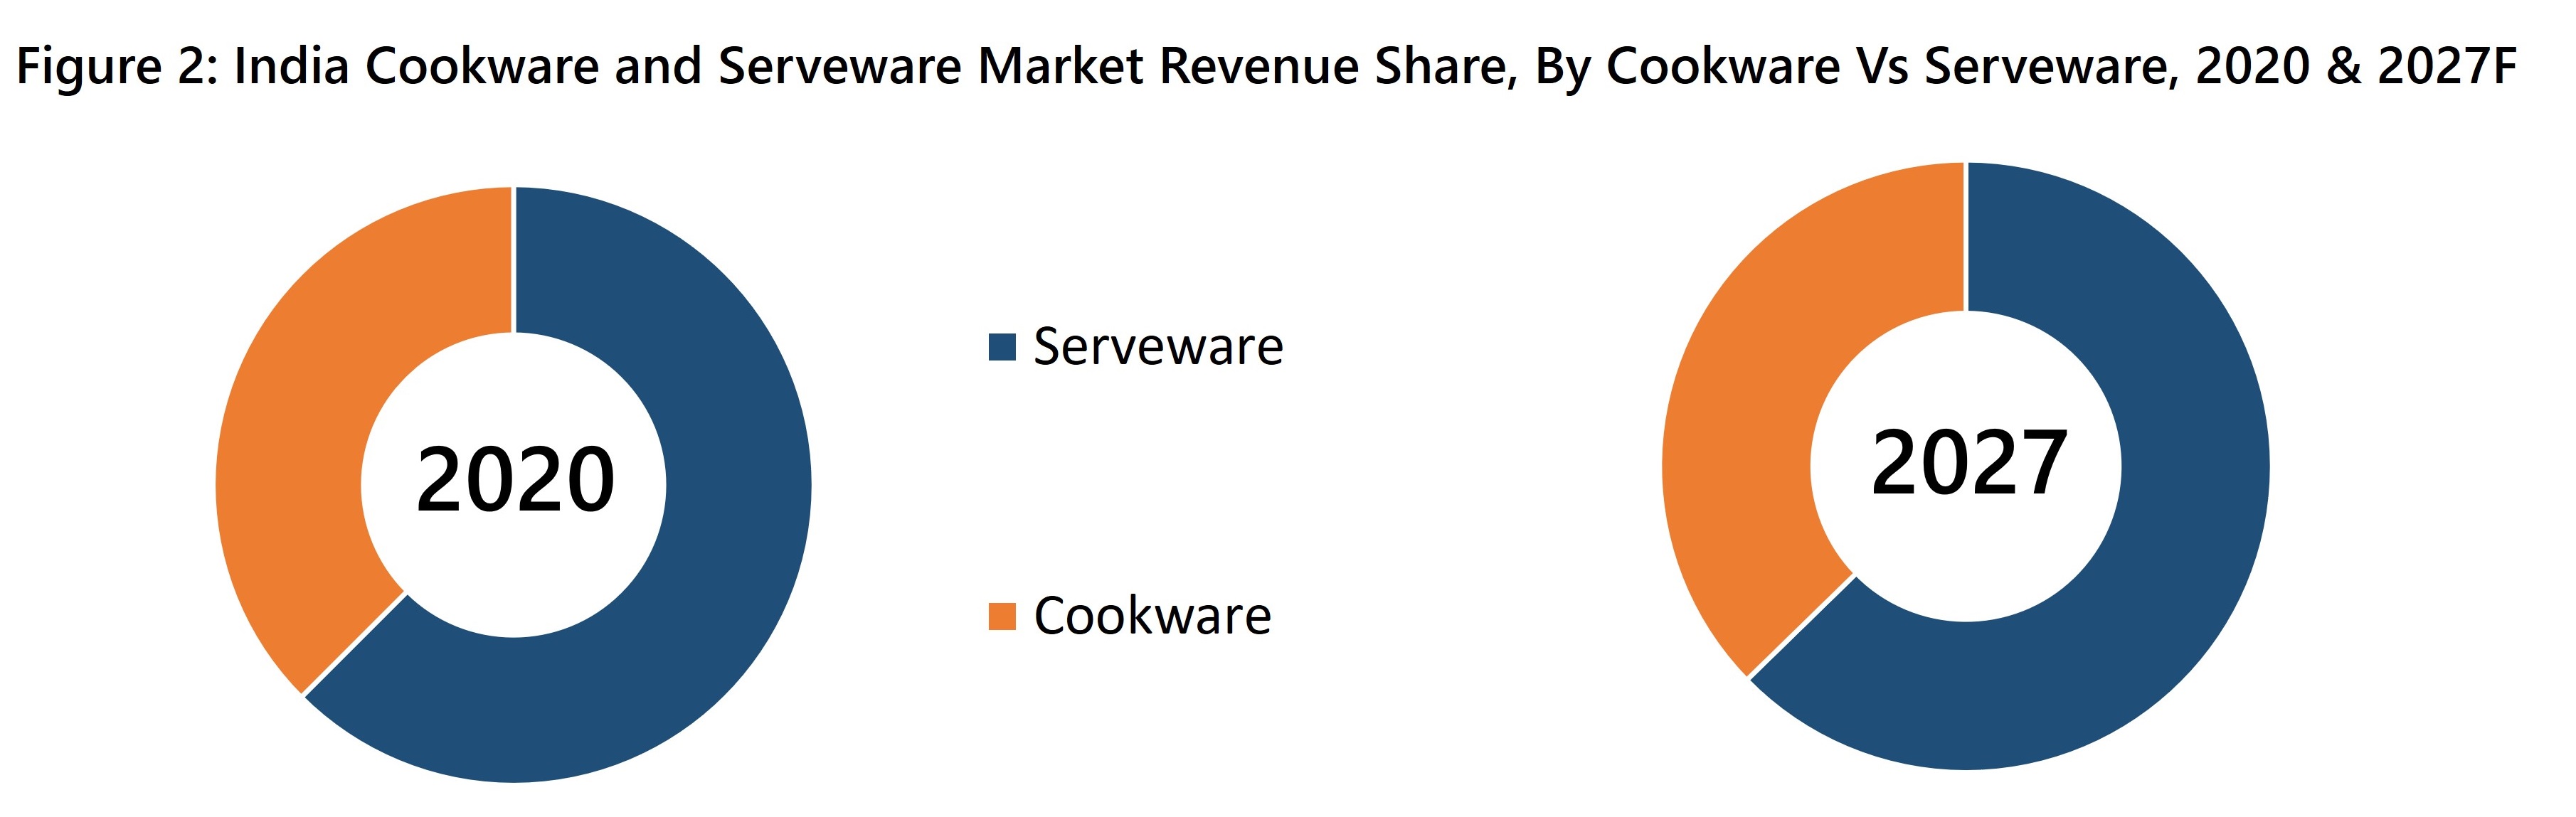 India Cookware and Serveware Market Revenue Share